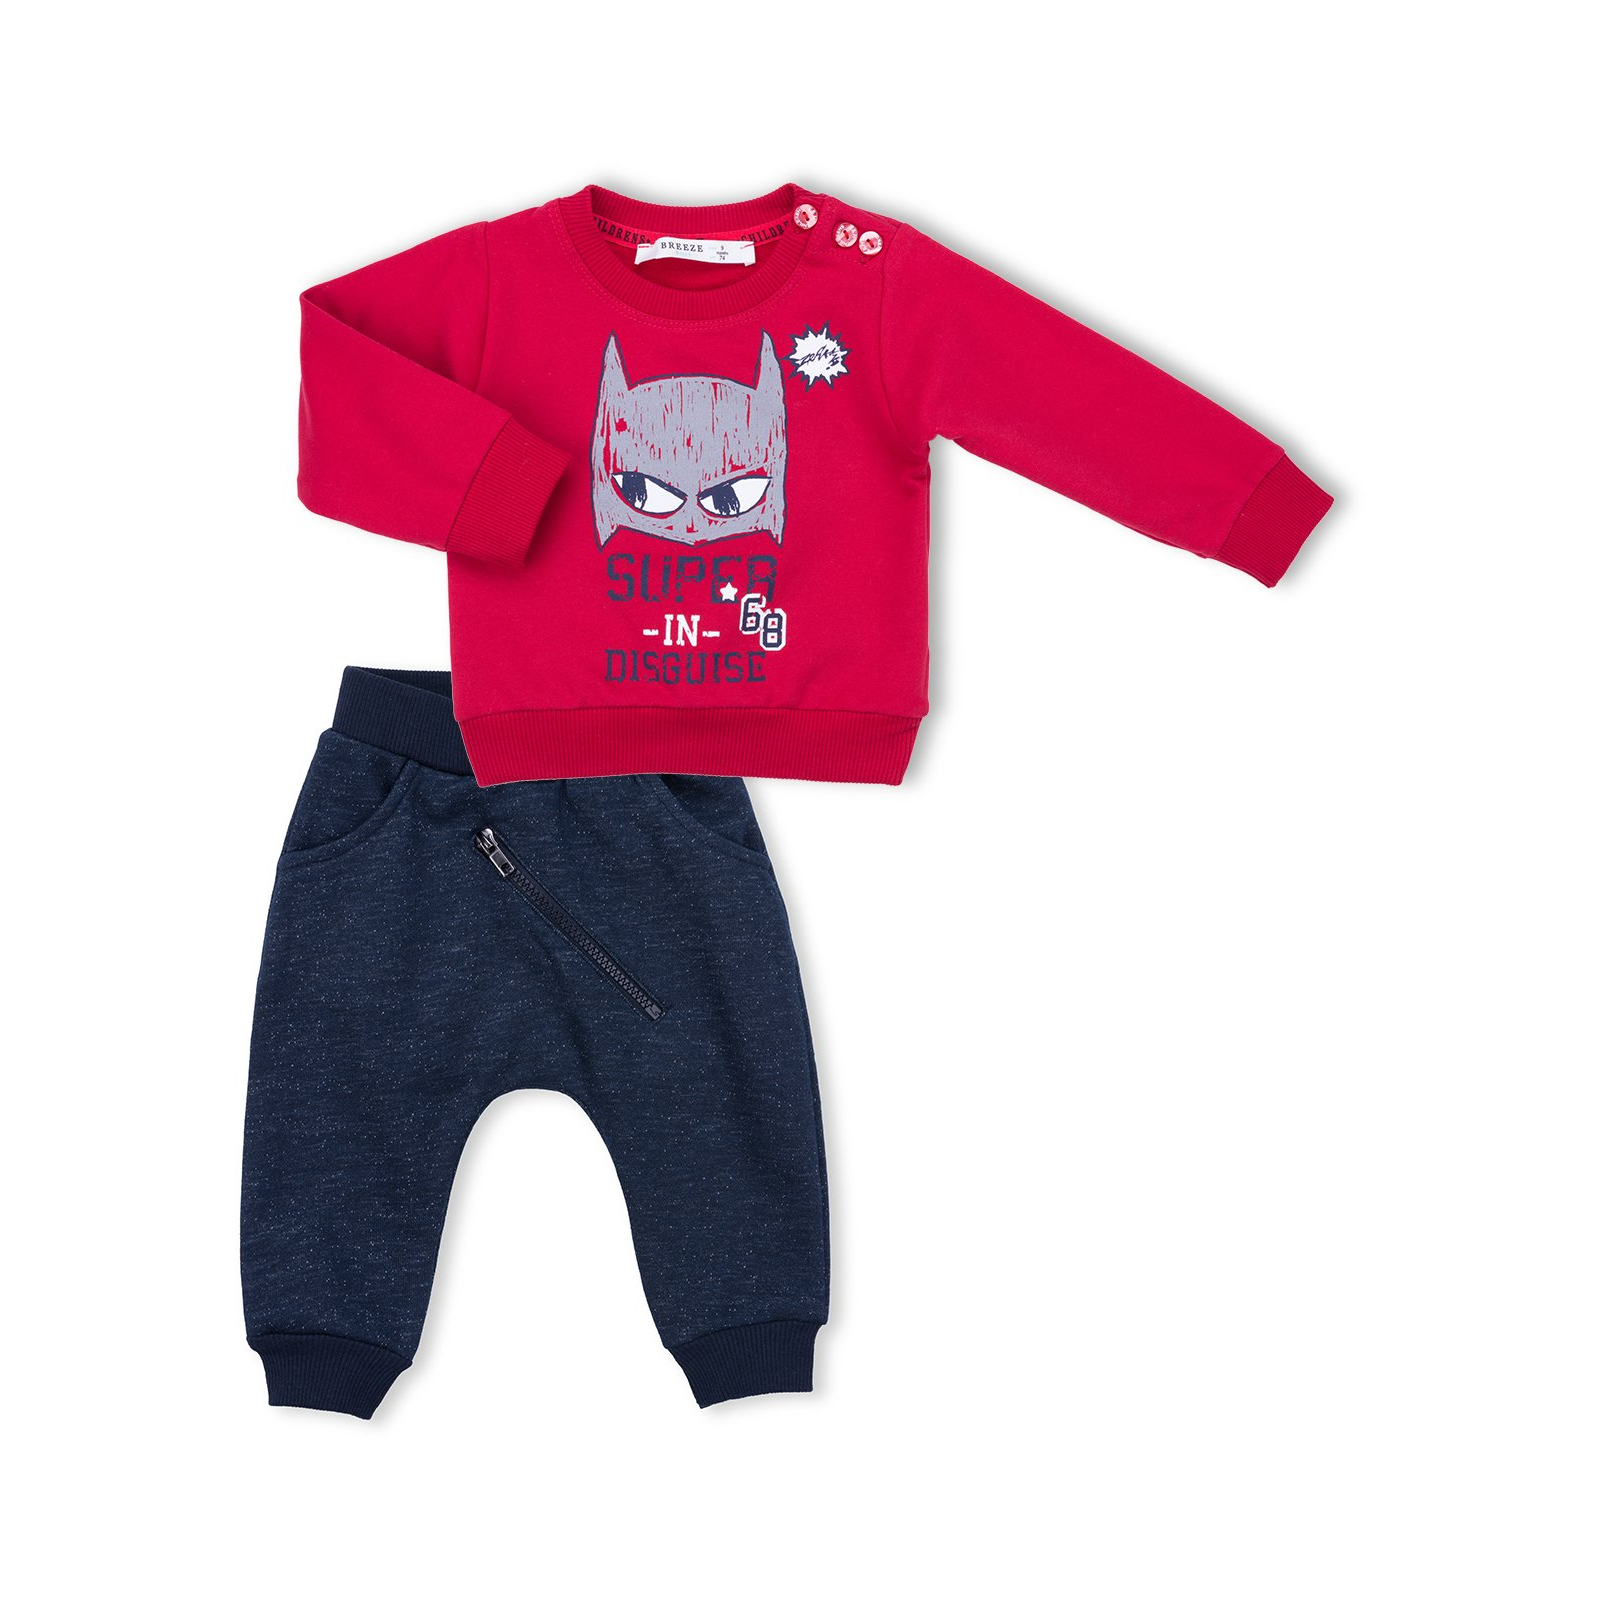 Набор детской одежды Breeze "Super in disguise" (10419-86B-red)